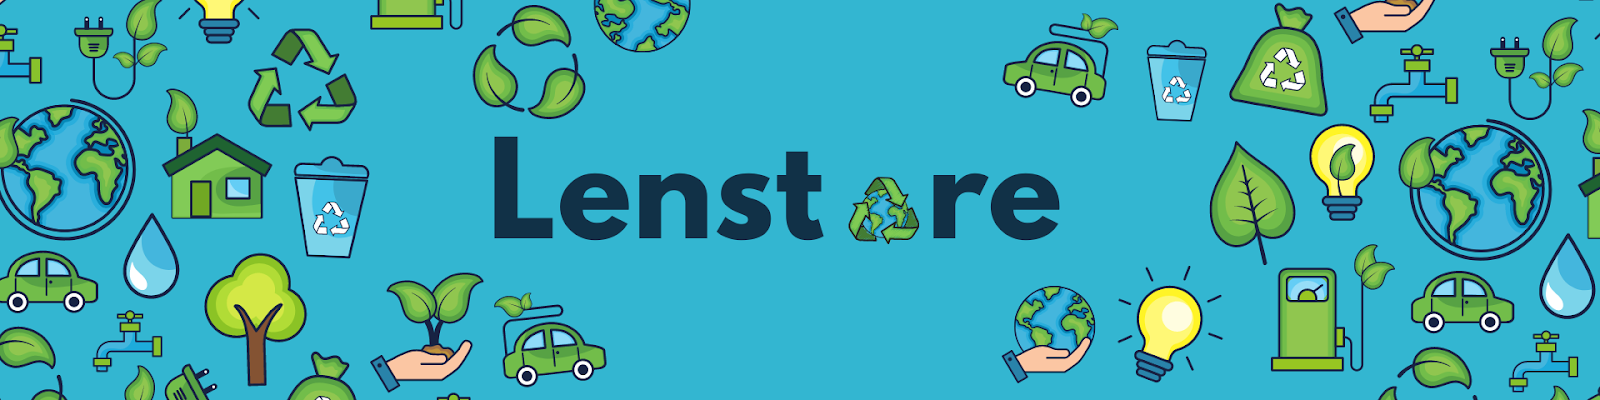 Lenstore-recycling-logo-green-earth